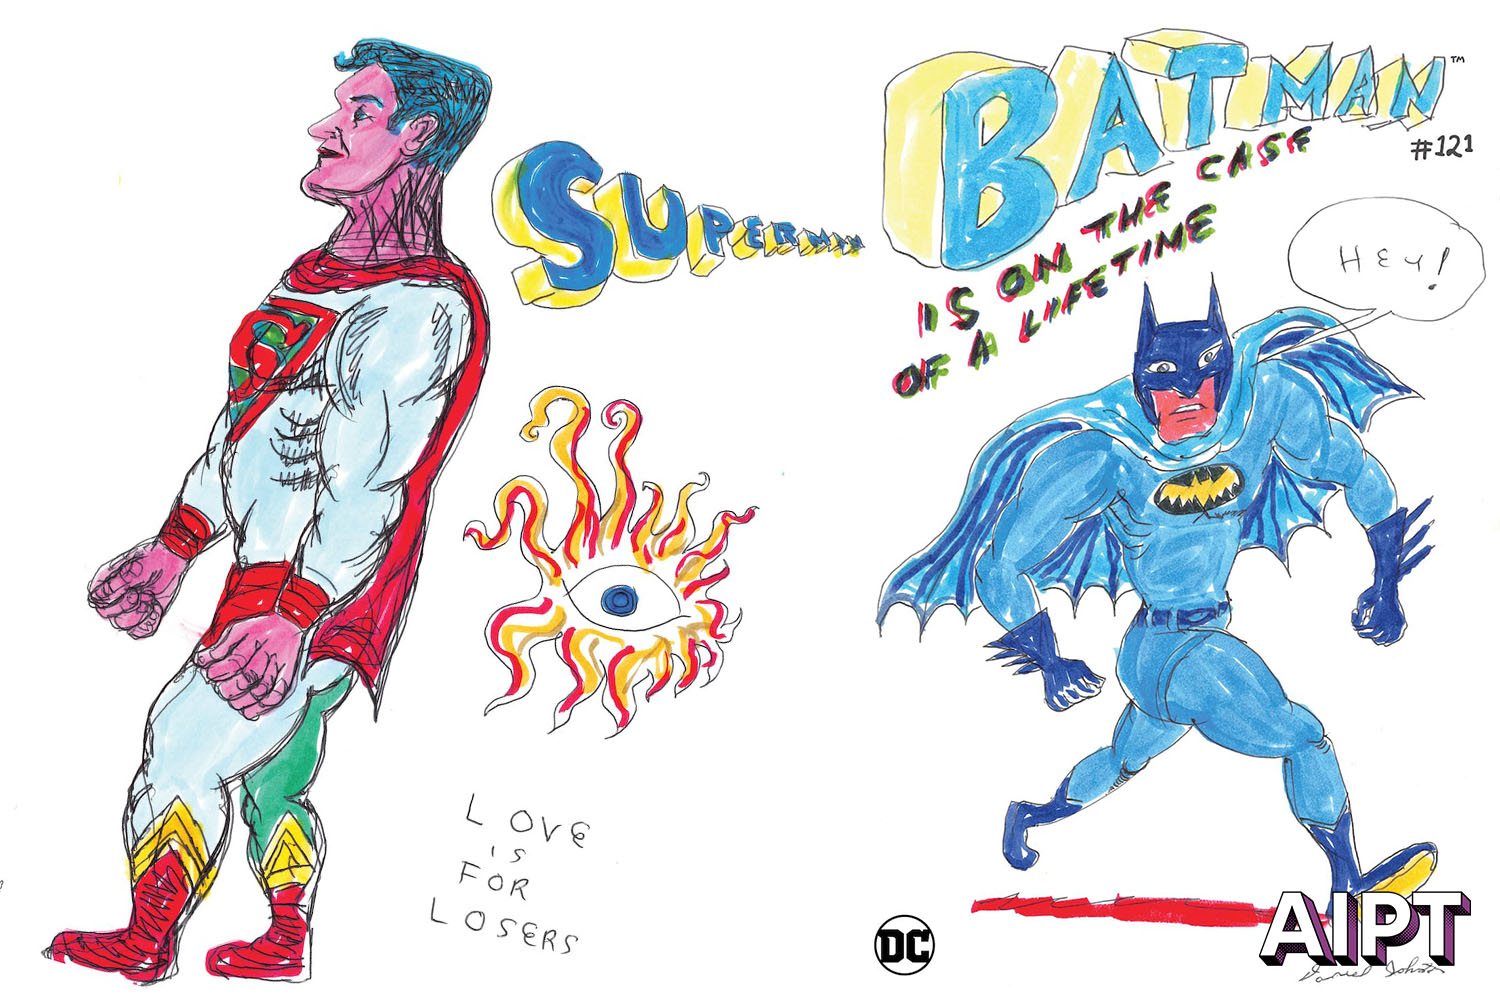 DC Comics to print late singer-songwriter 'Batman' #121 covers by Daniel Johnston